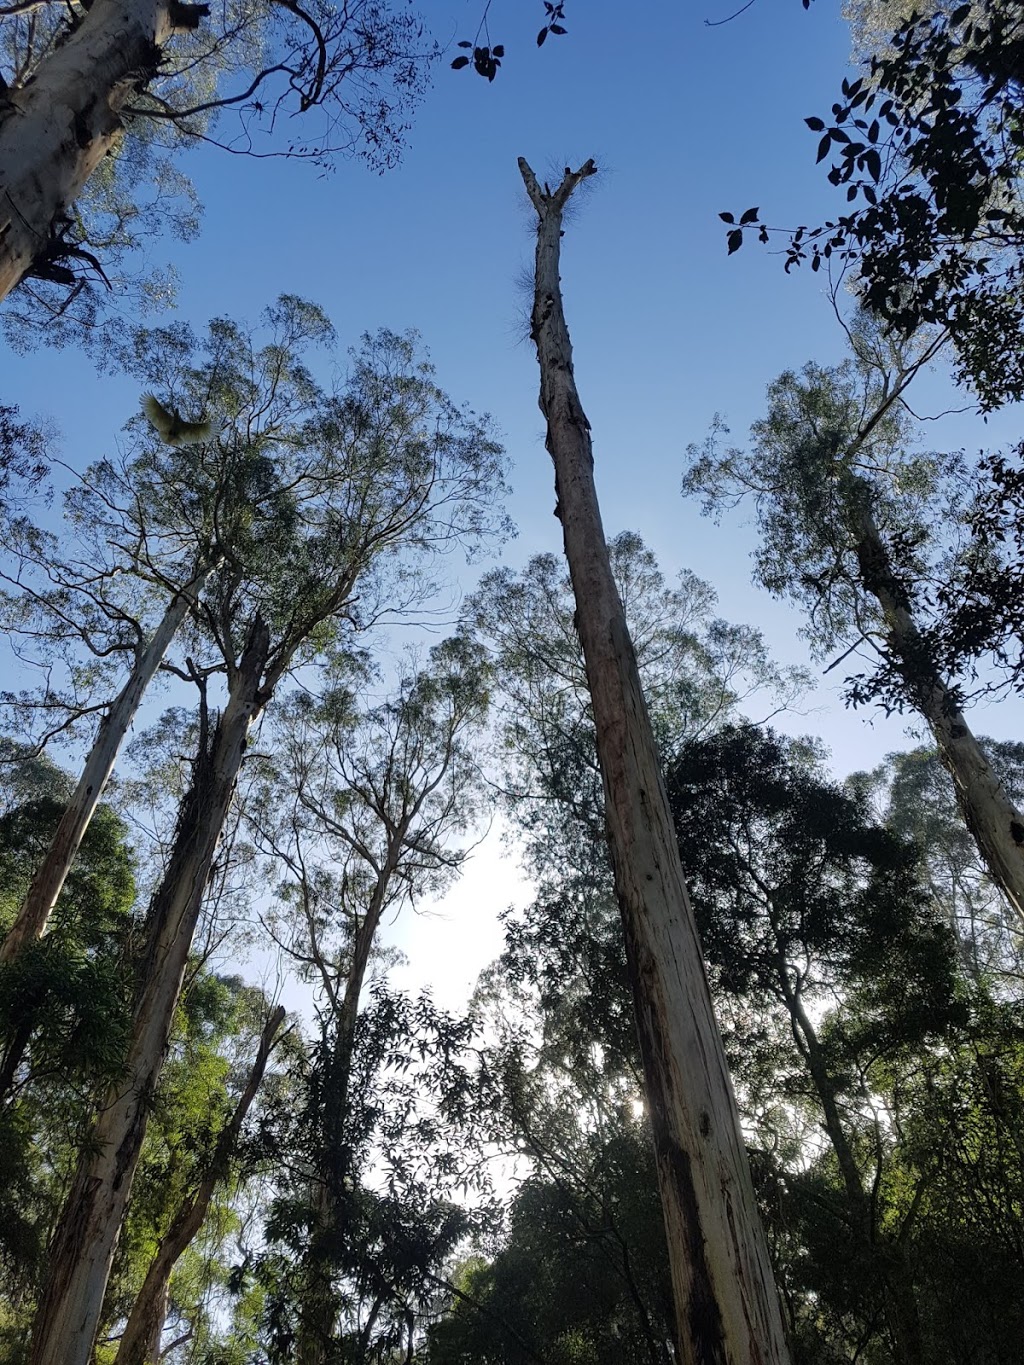 Kokoda Memorial Walk | park | Tree Fern Gully Track, Tremont VIC 3785, Australia